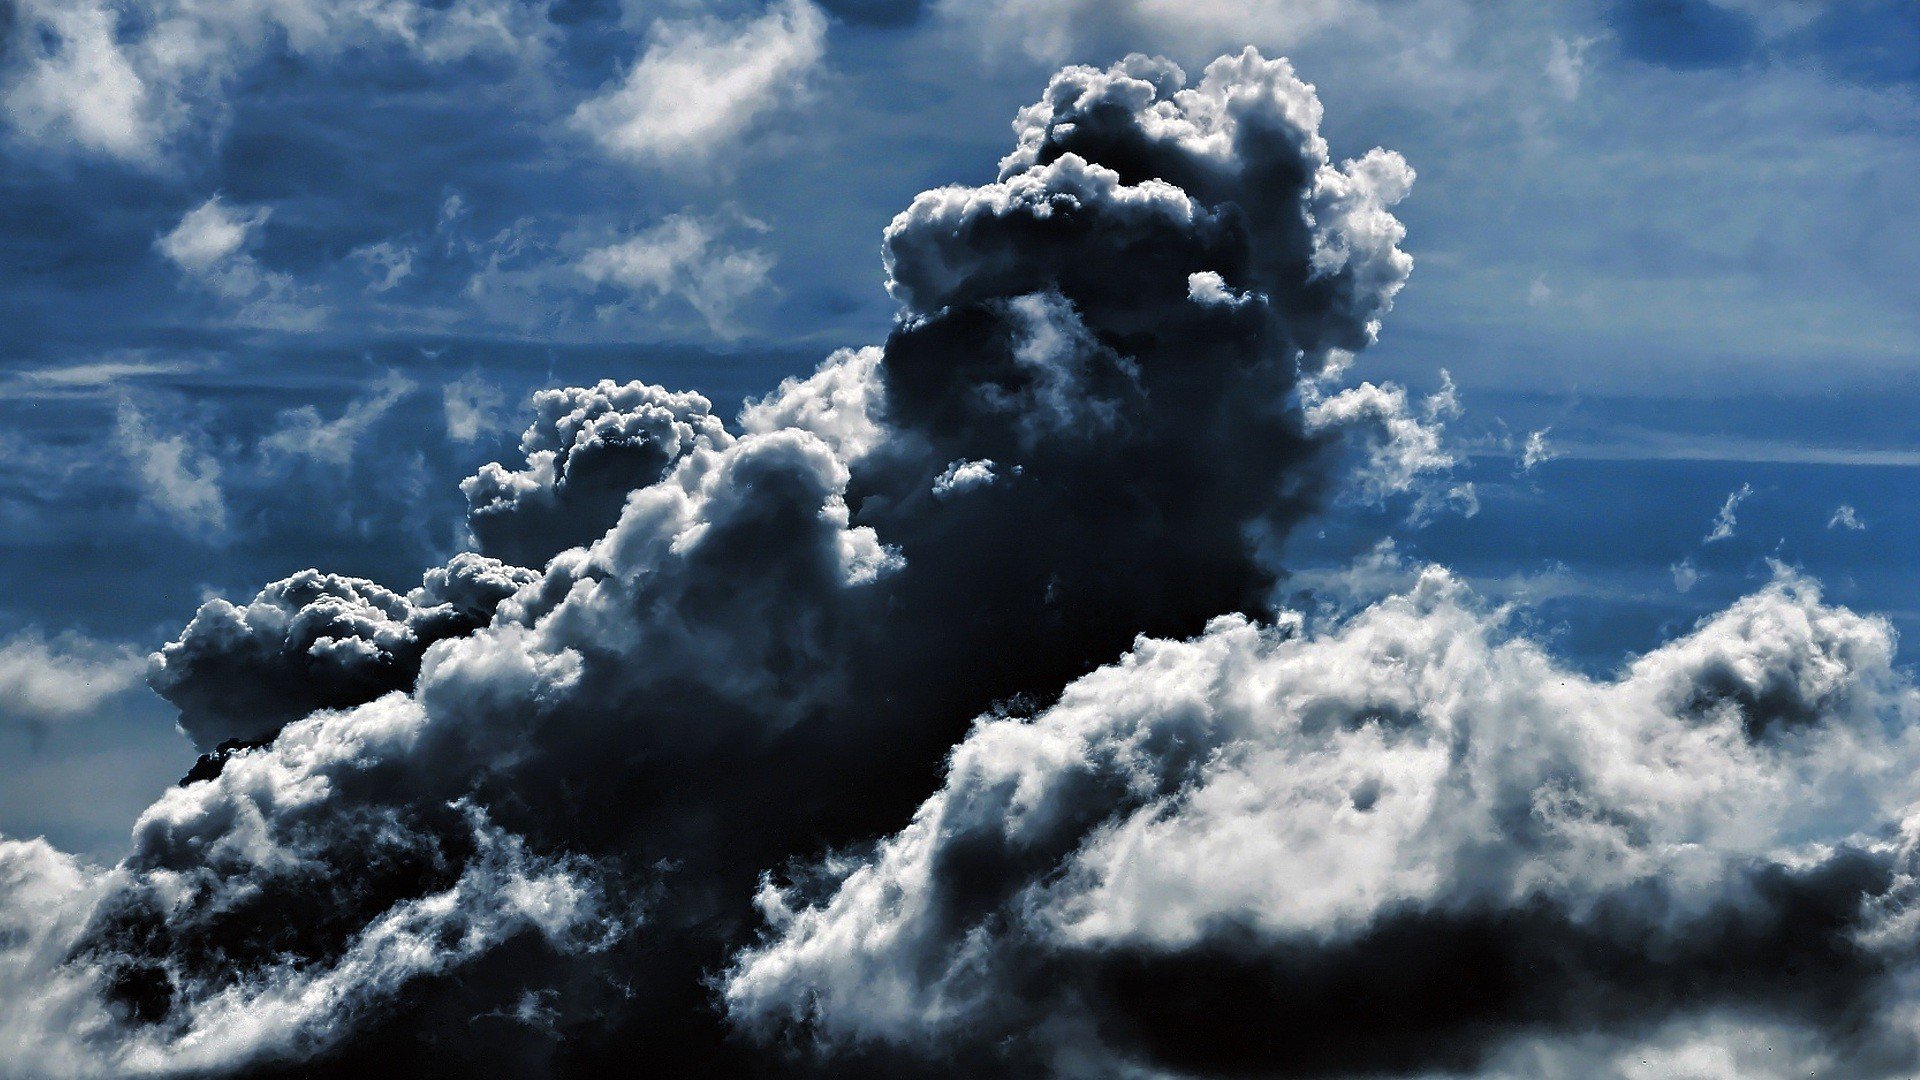 Storm clouds wallpaper 6027